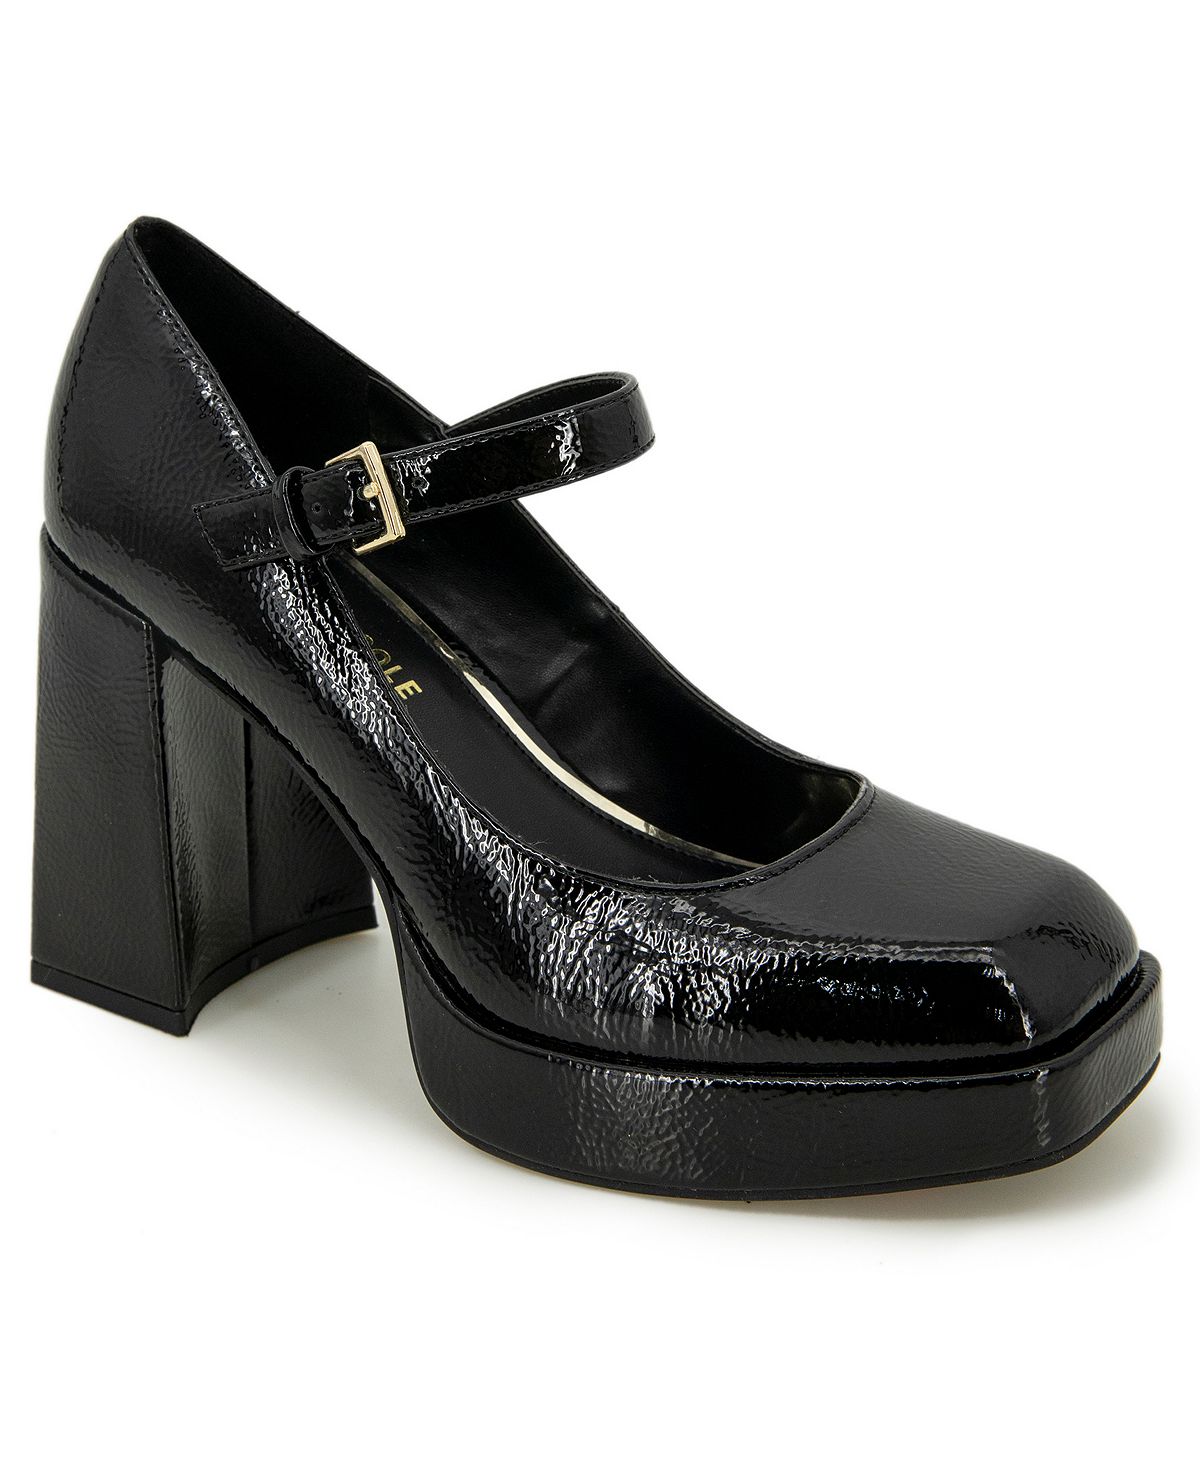 Женские туфли-лодочки на платформе Brynne Kenneth Cole New York, черный цена и фото